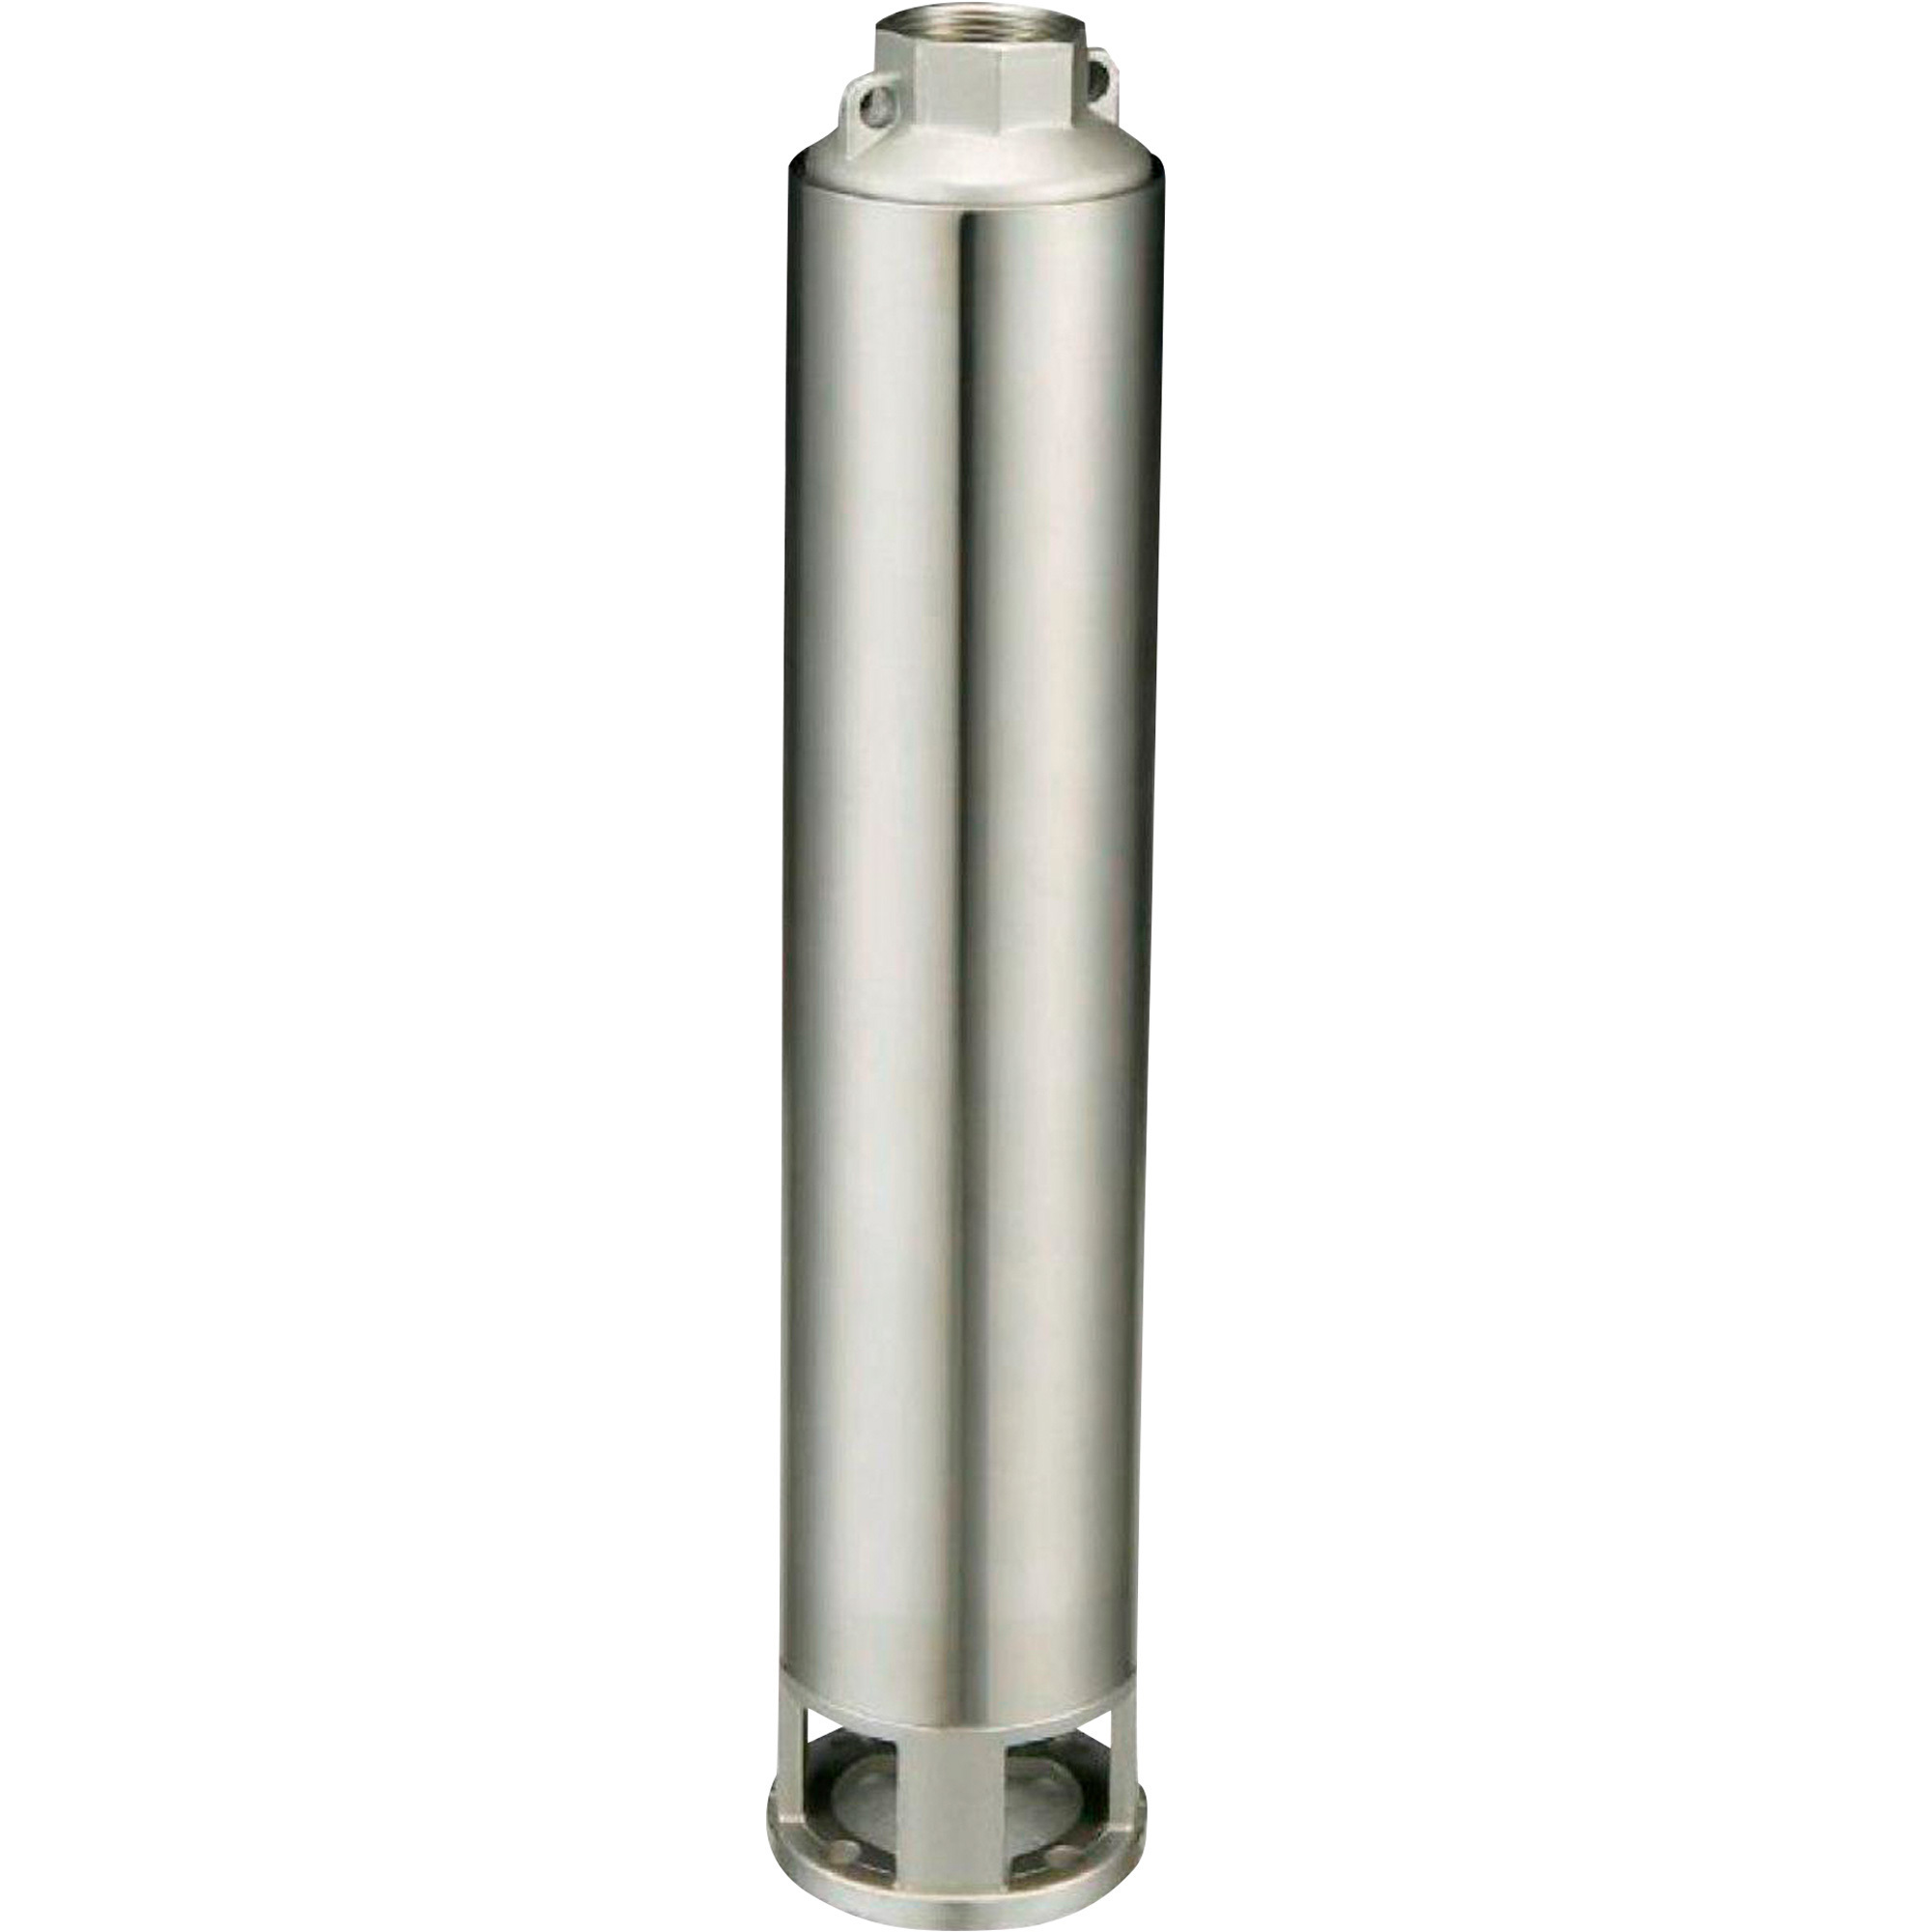 Gol Pumps 4Inch Submersible Deep Well Water Pump — 1584 GPH, Requires 2 HP Motor, 2Inch Port, Model AP4 XK 6 02/10 -  2129102